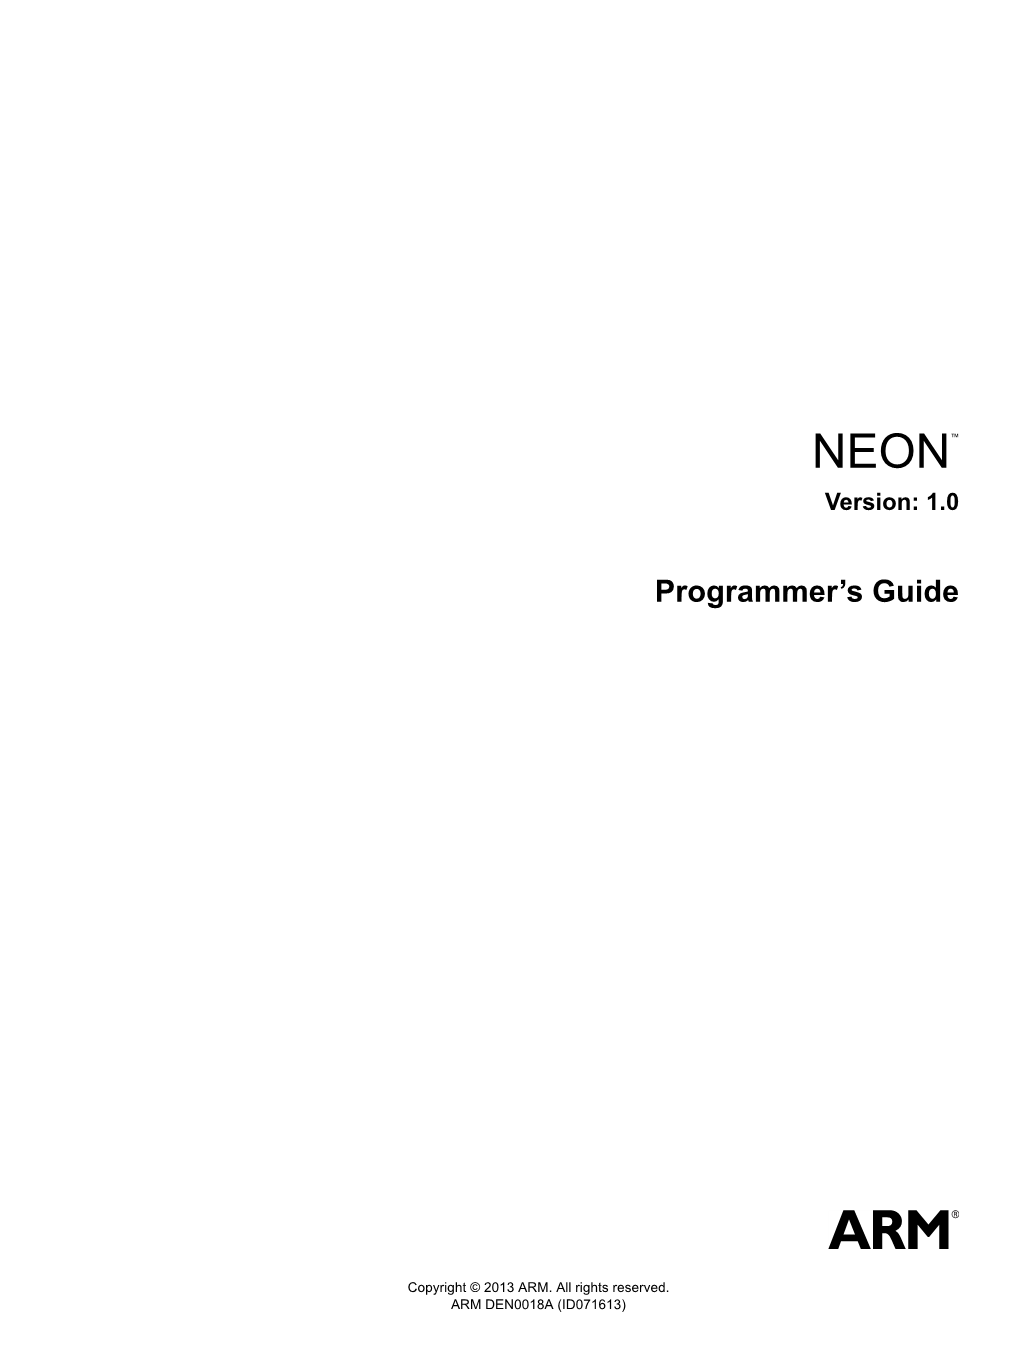 NEON Programmer's Guide